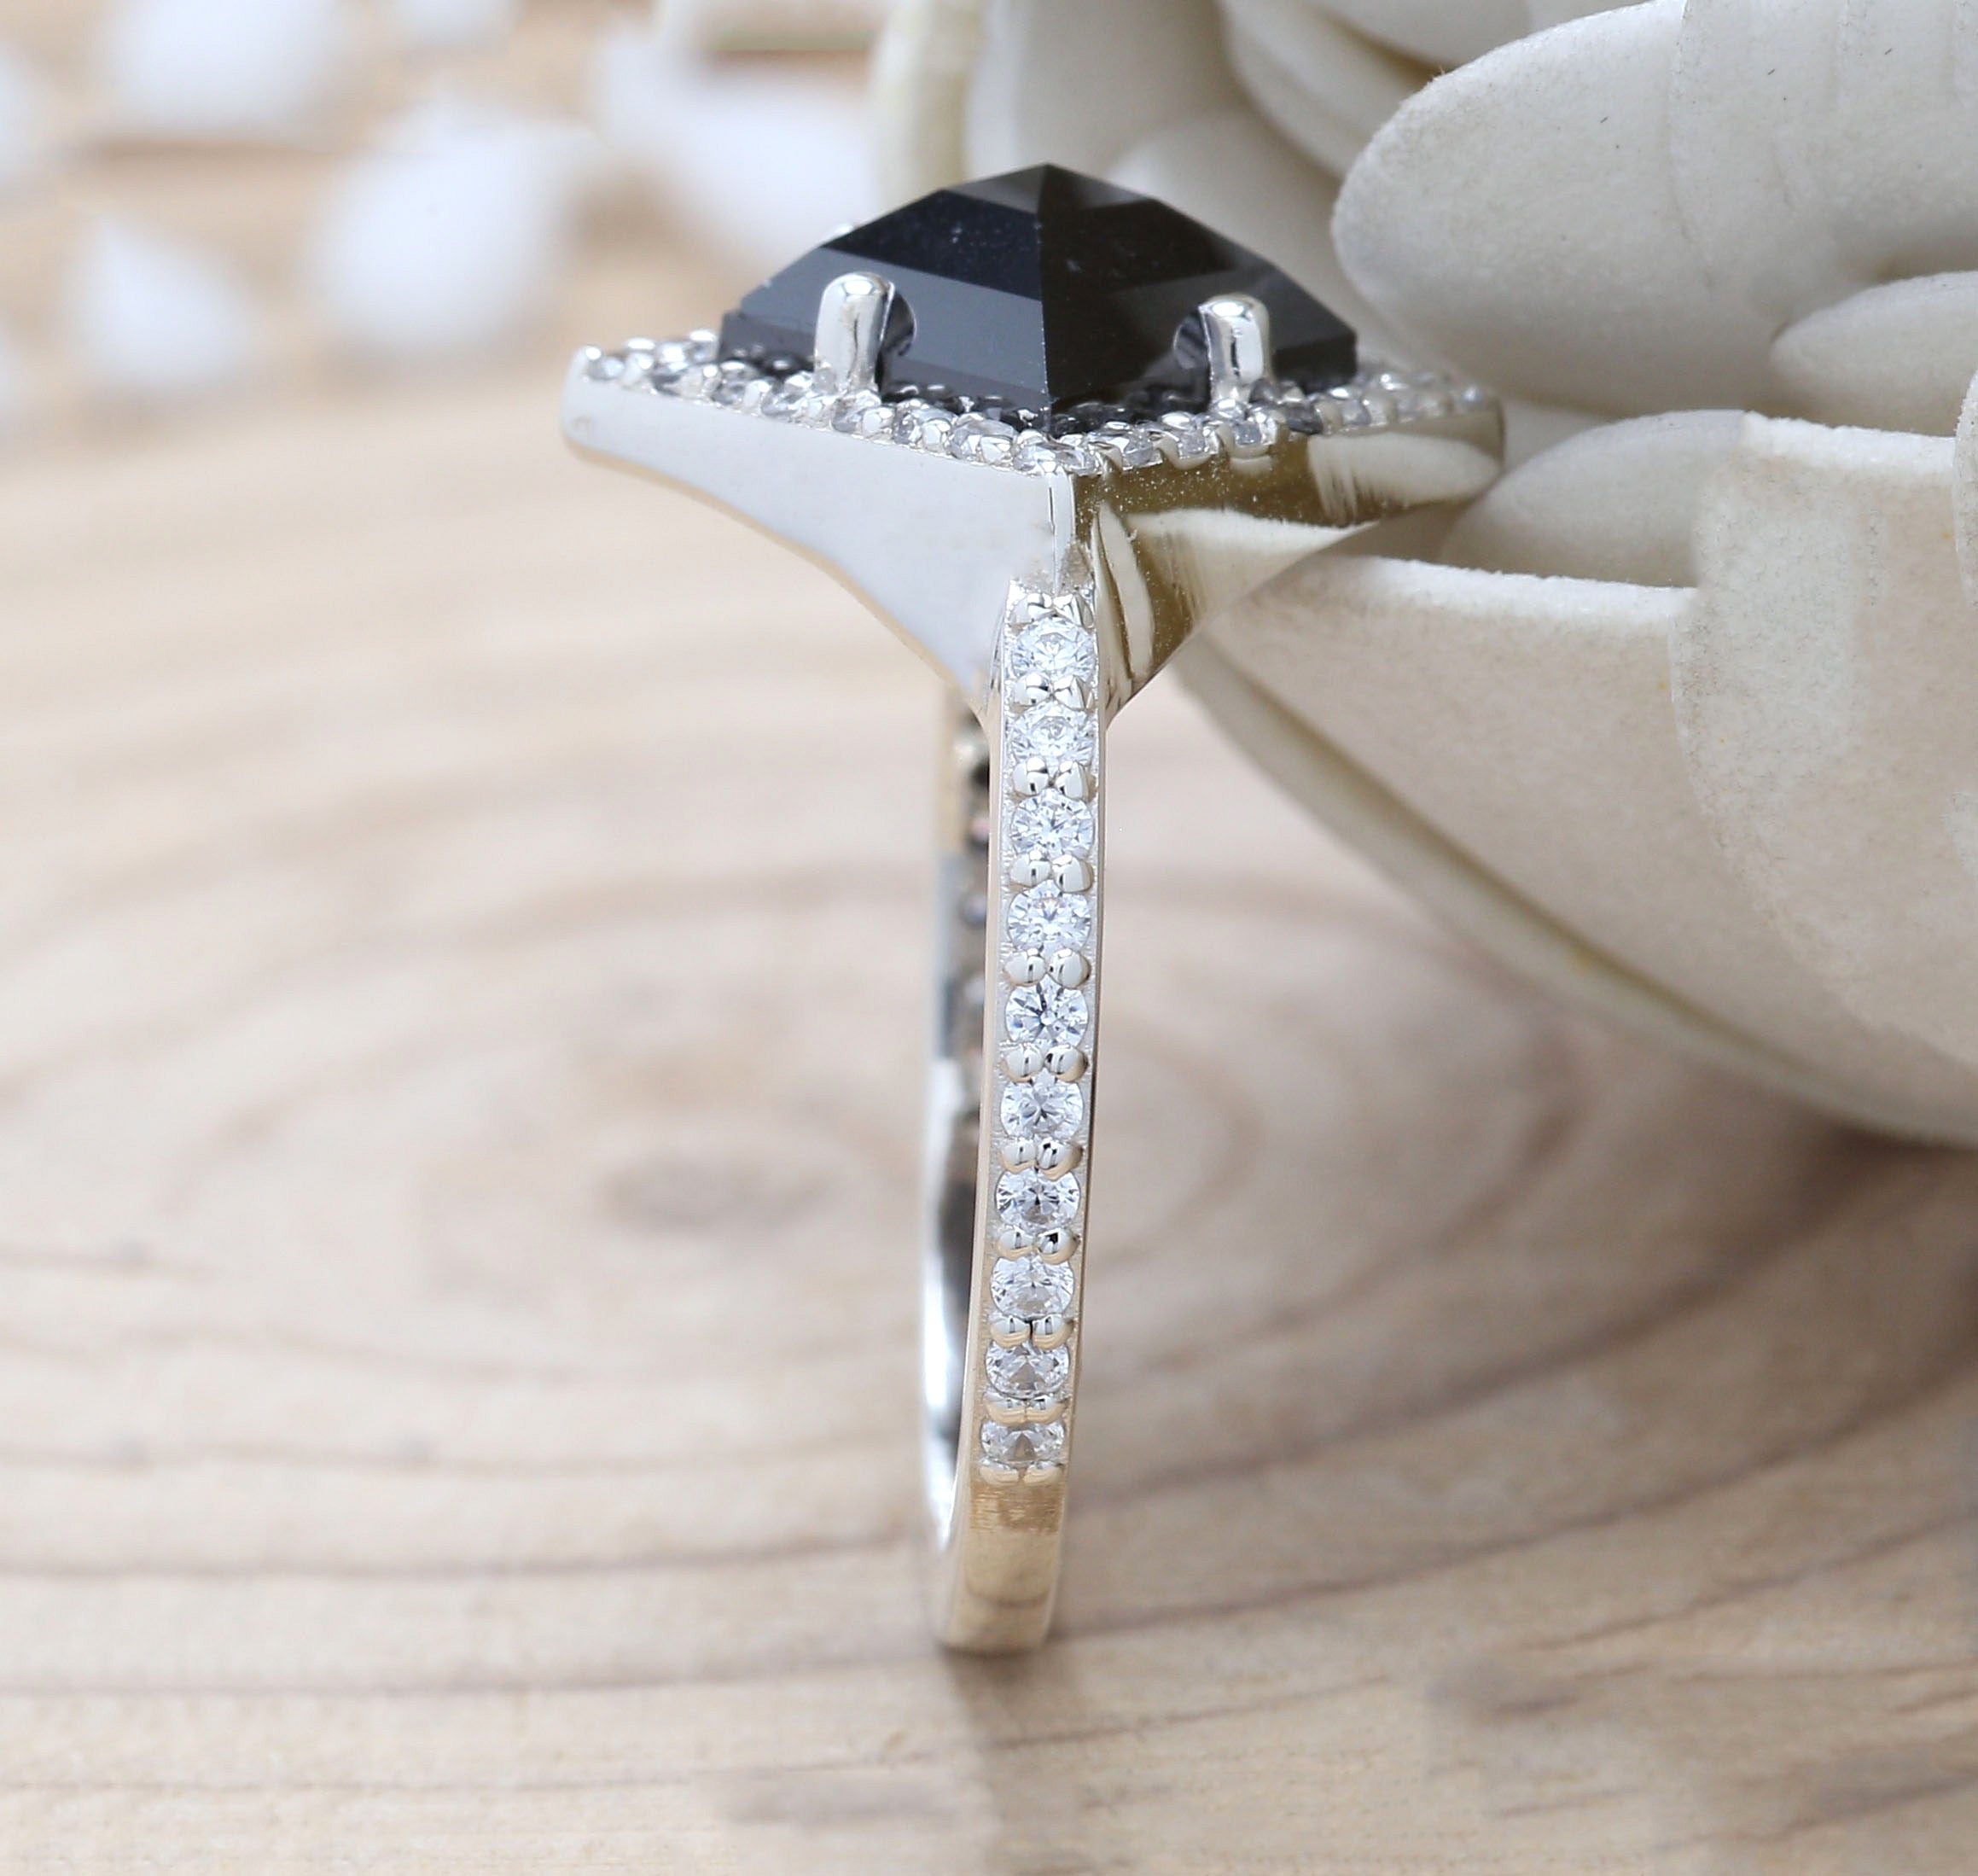 Kite Cut Black Color Diamond Ring 1.96 Ct 9.65 MM Kite Shape Diamond Ring 14K Solid White Gold Silver Engagement Ring Gift For Her QL9571